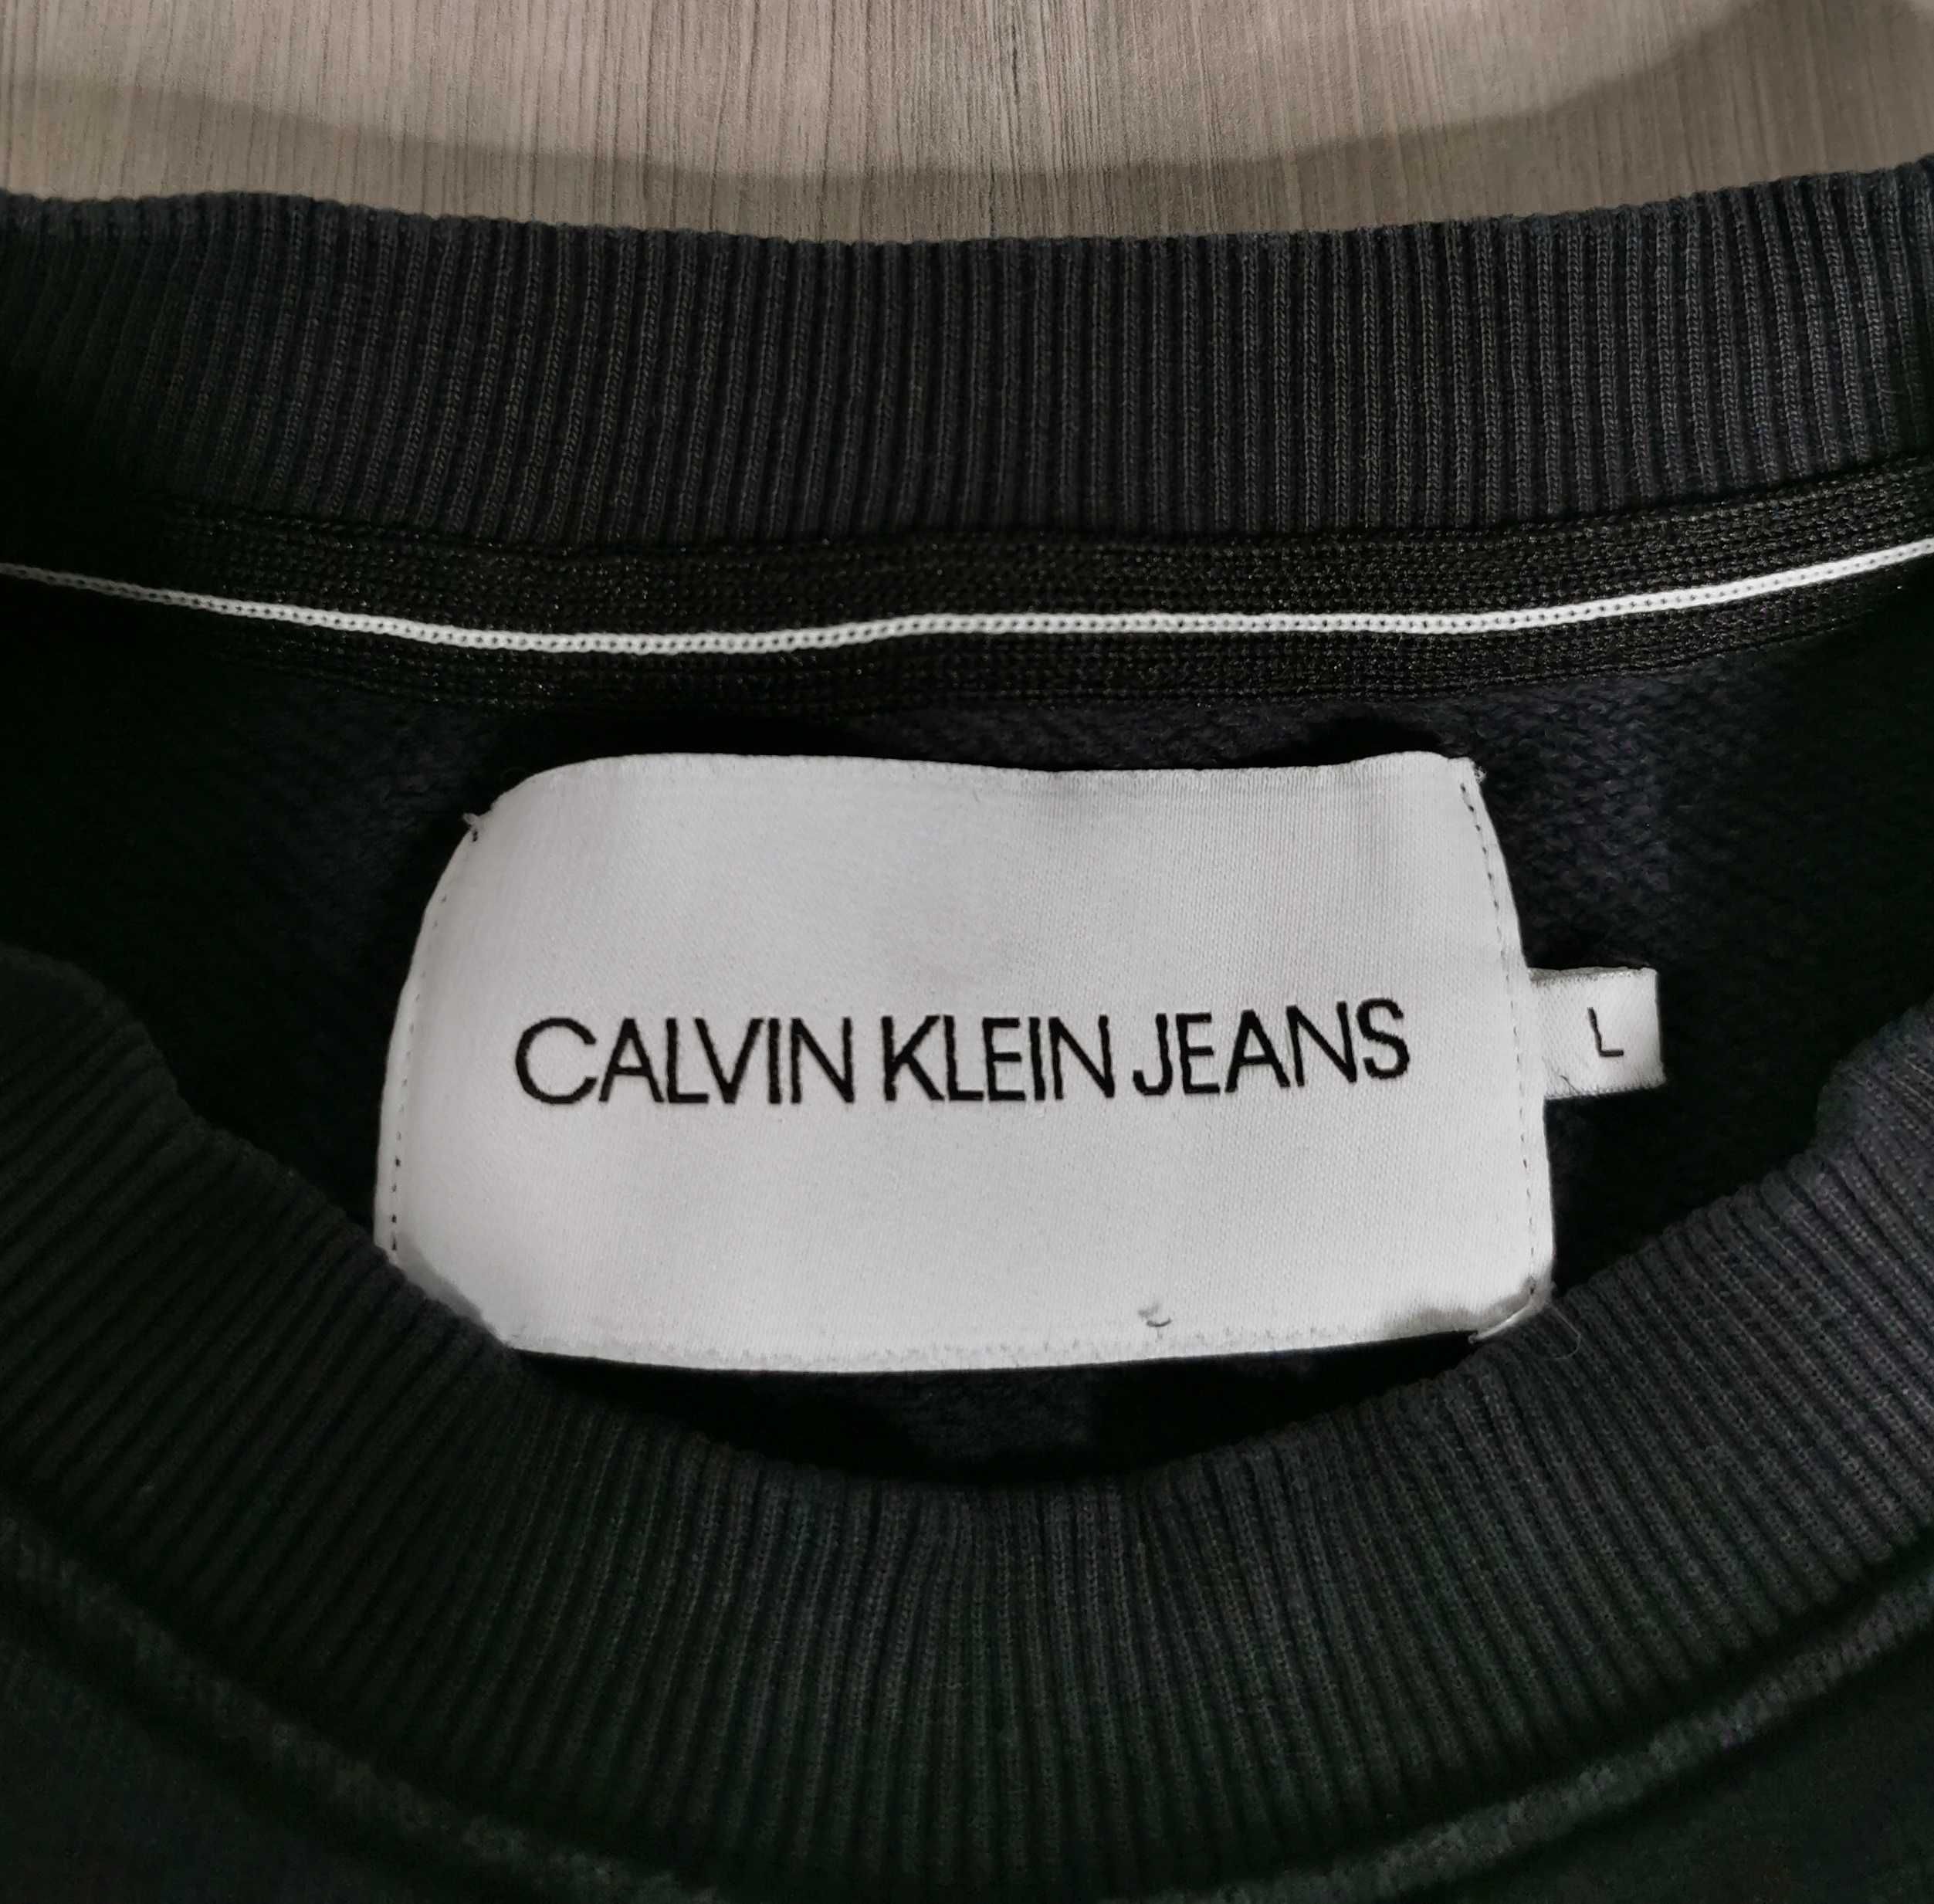 Bluza Calvin Klein big print duże logo rozmiar L/XL